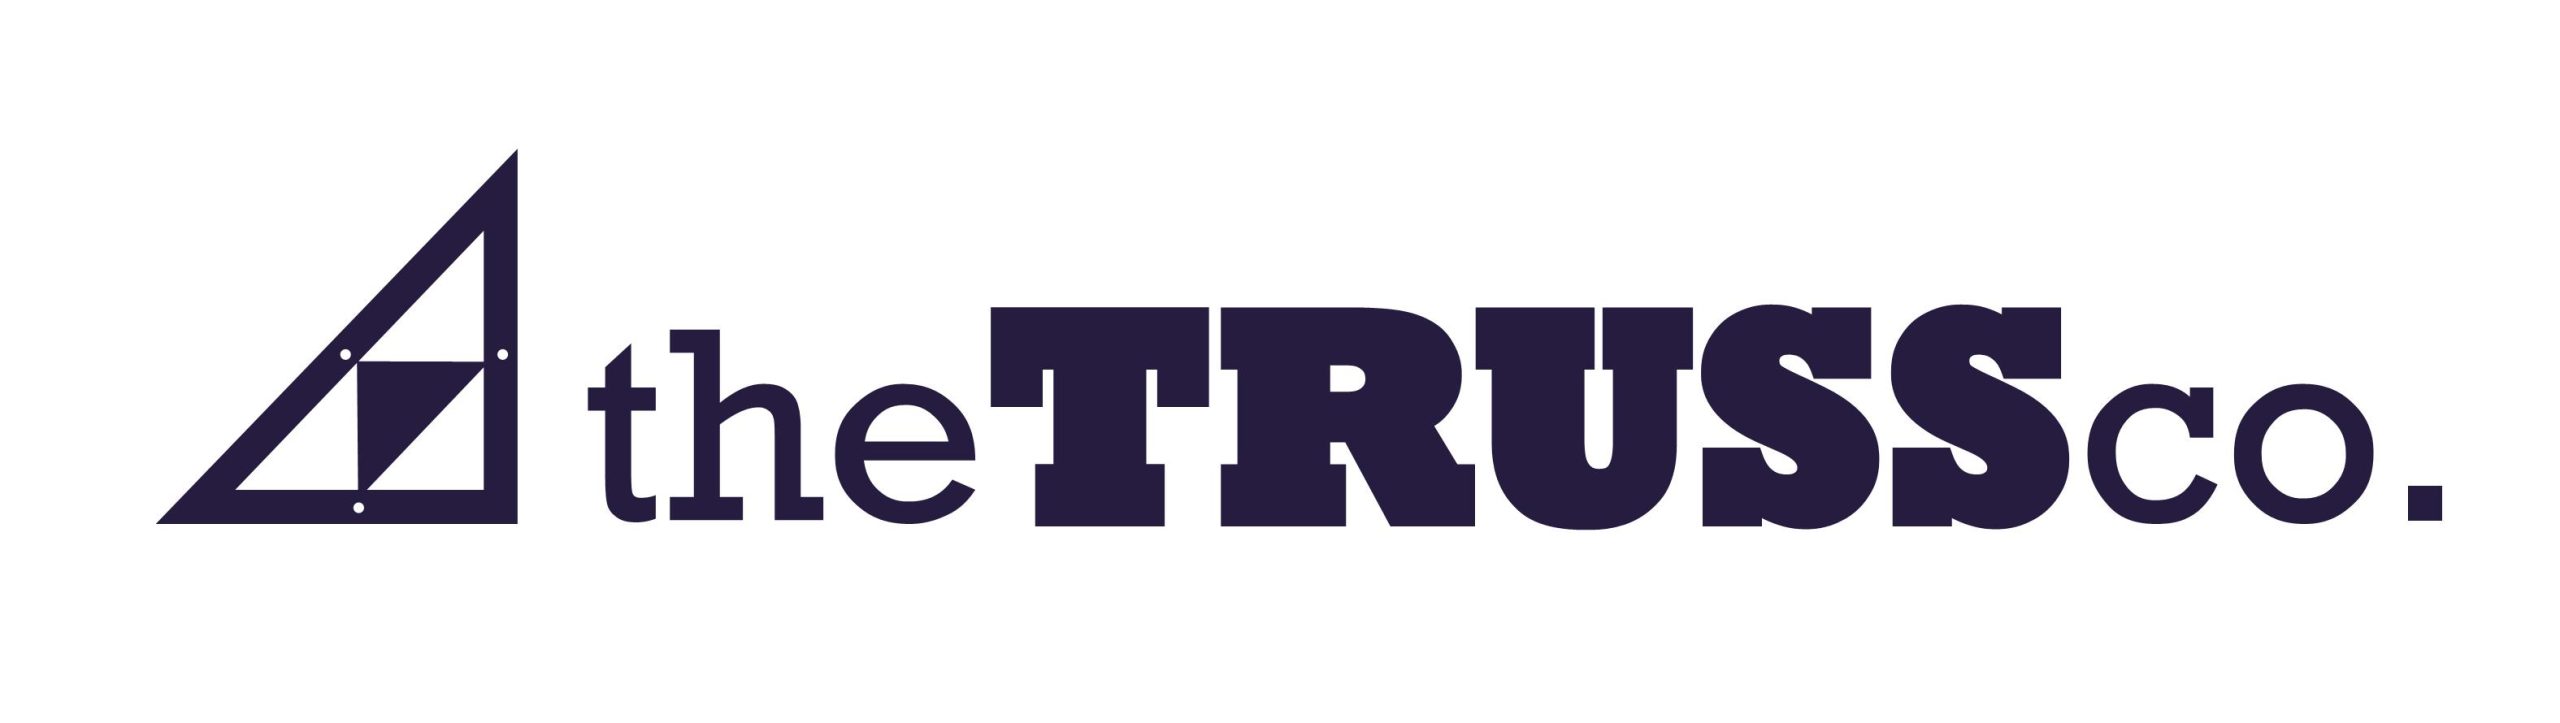 The Truss Co logo